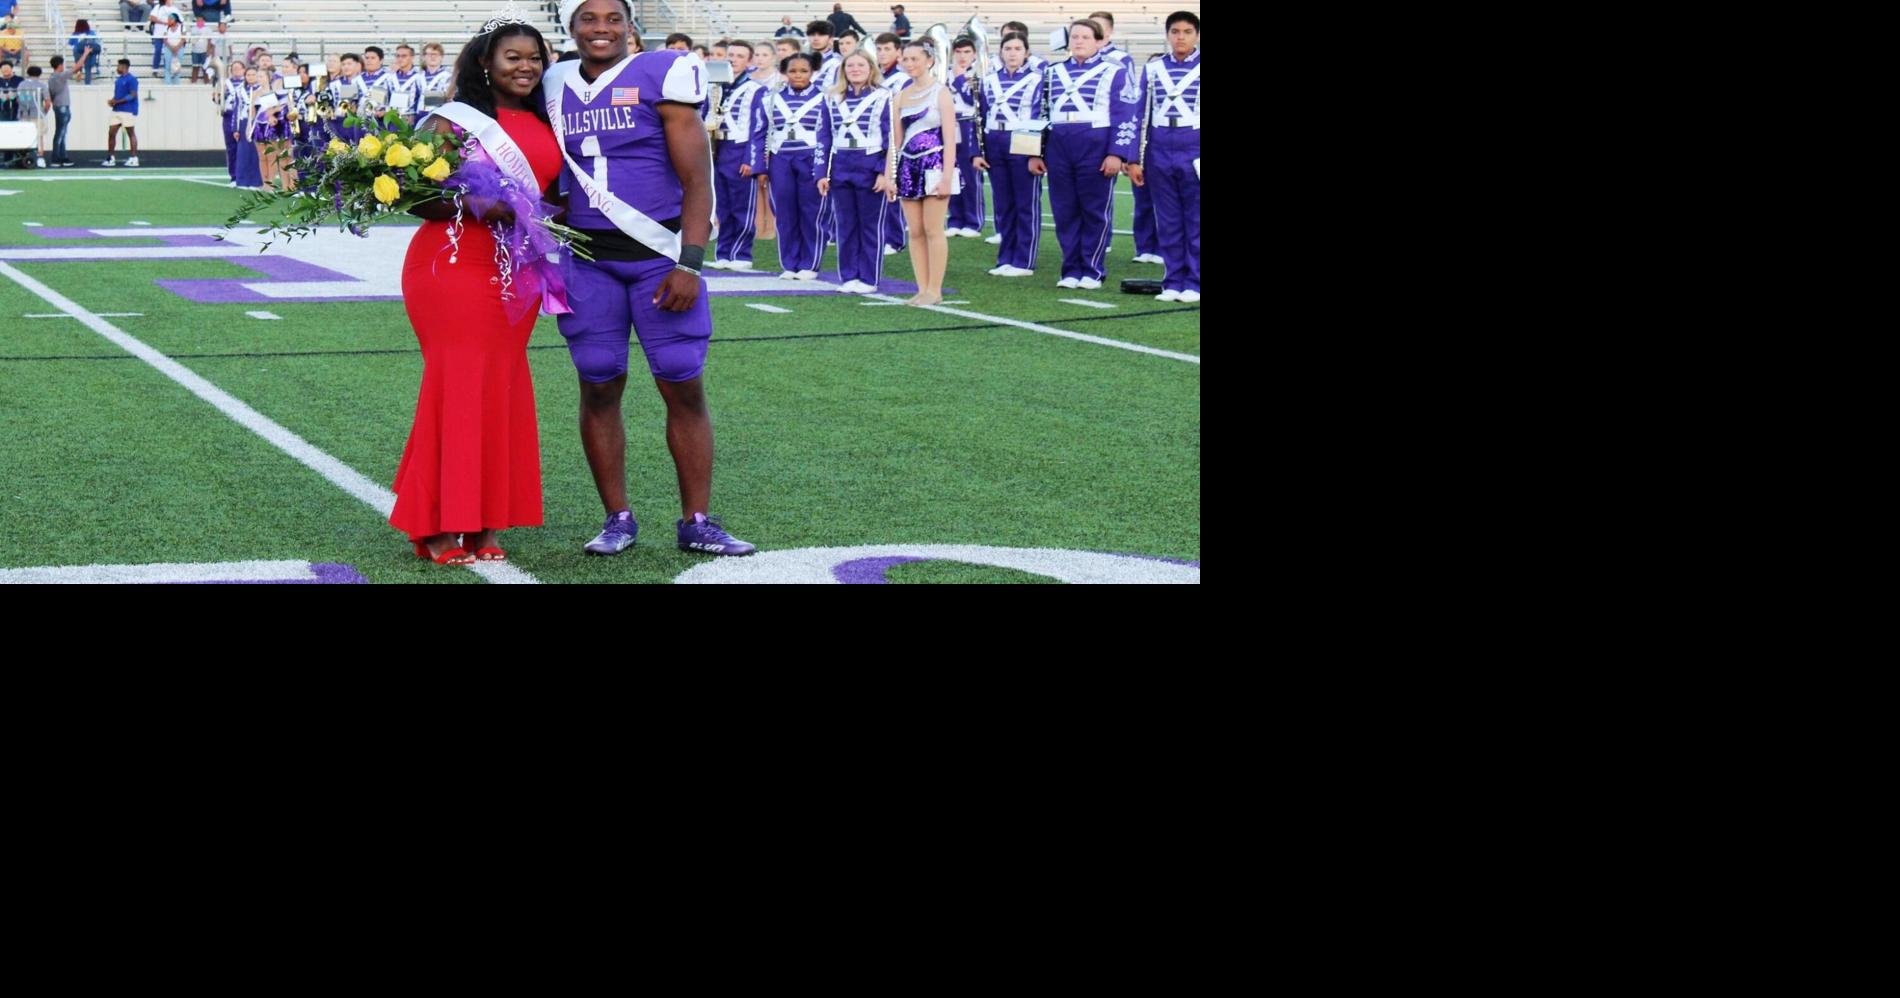 Elysian Fields, Hallsville High School crown homecoming royalty, News